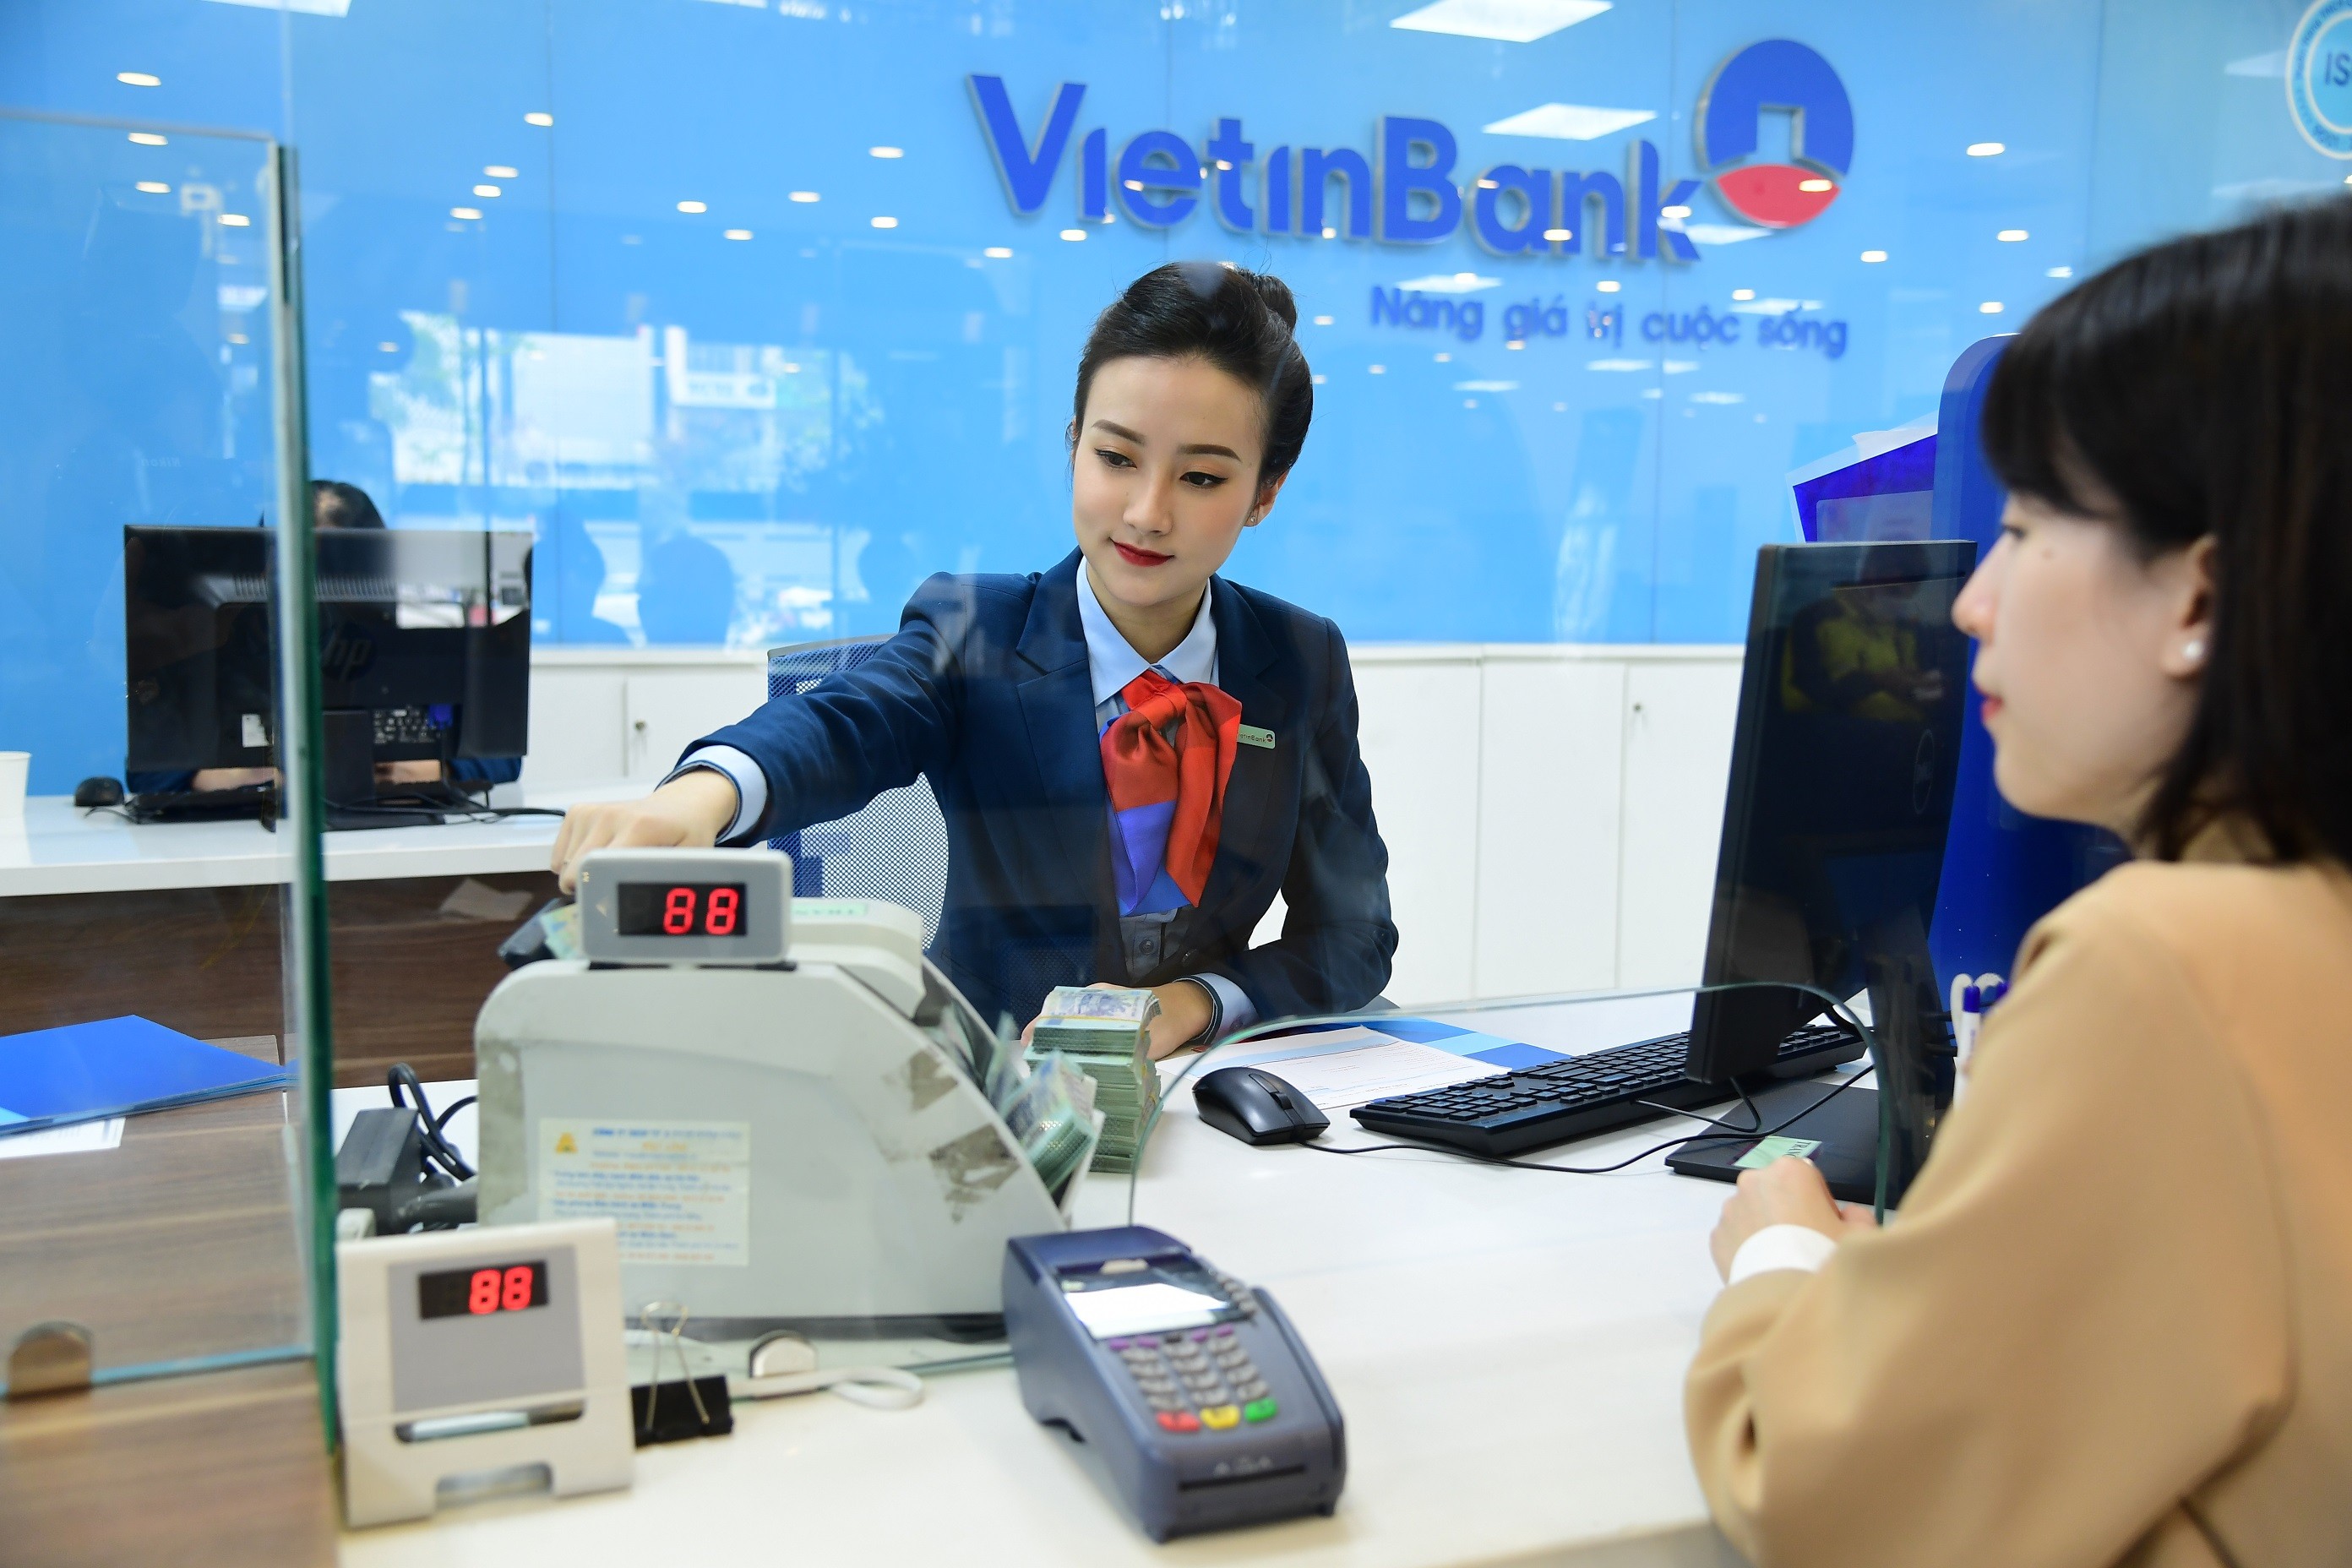 vietinbank-phat-hanh-lo-trai-phieu-dau-tien-trong-nam-tri-gia-500-ty-dong-1688790695.jpg